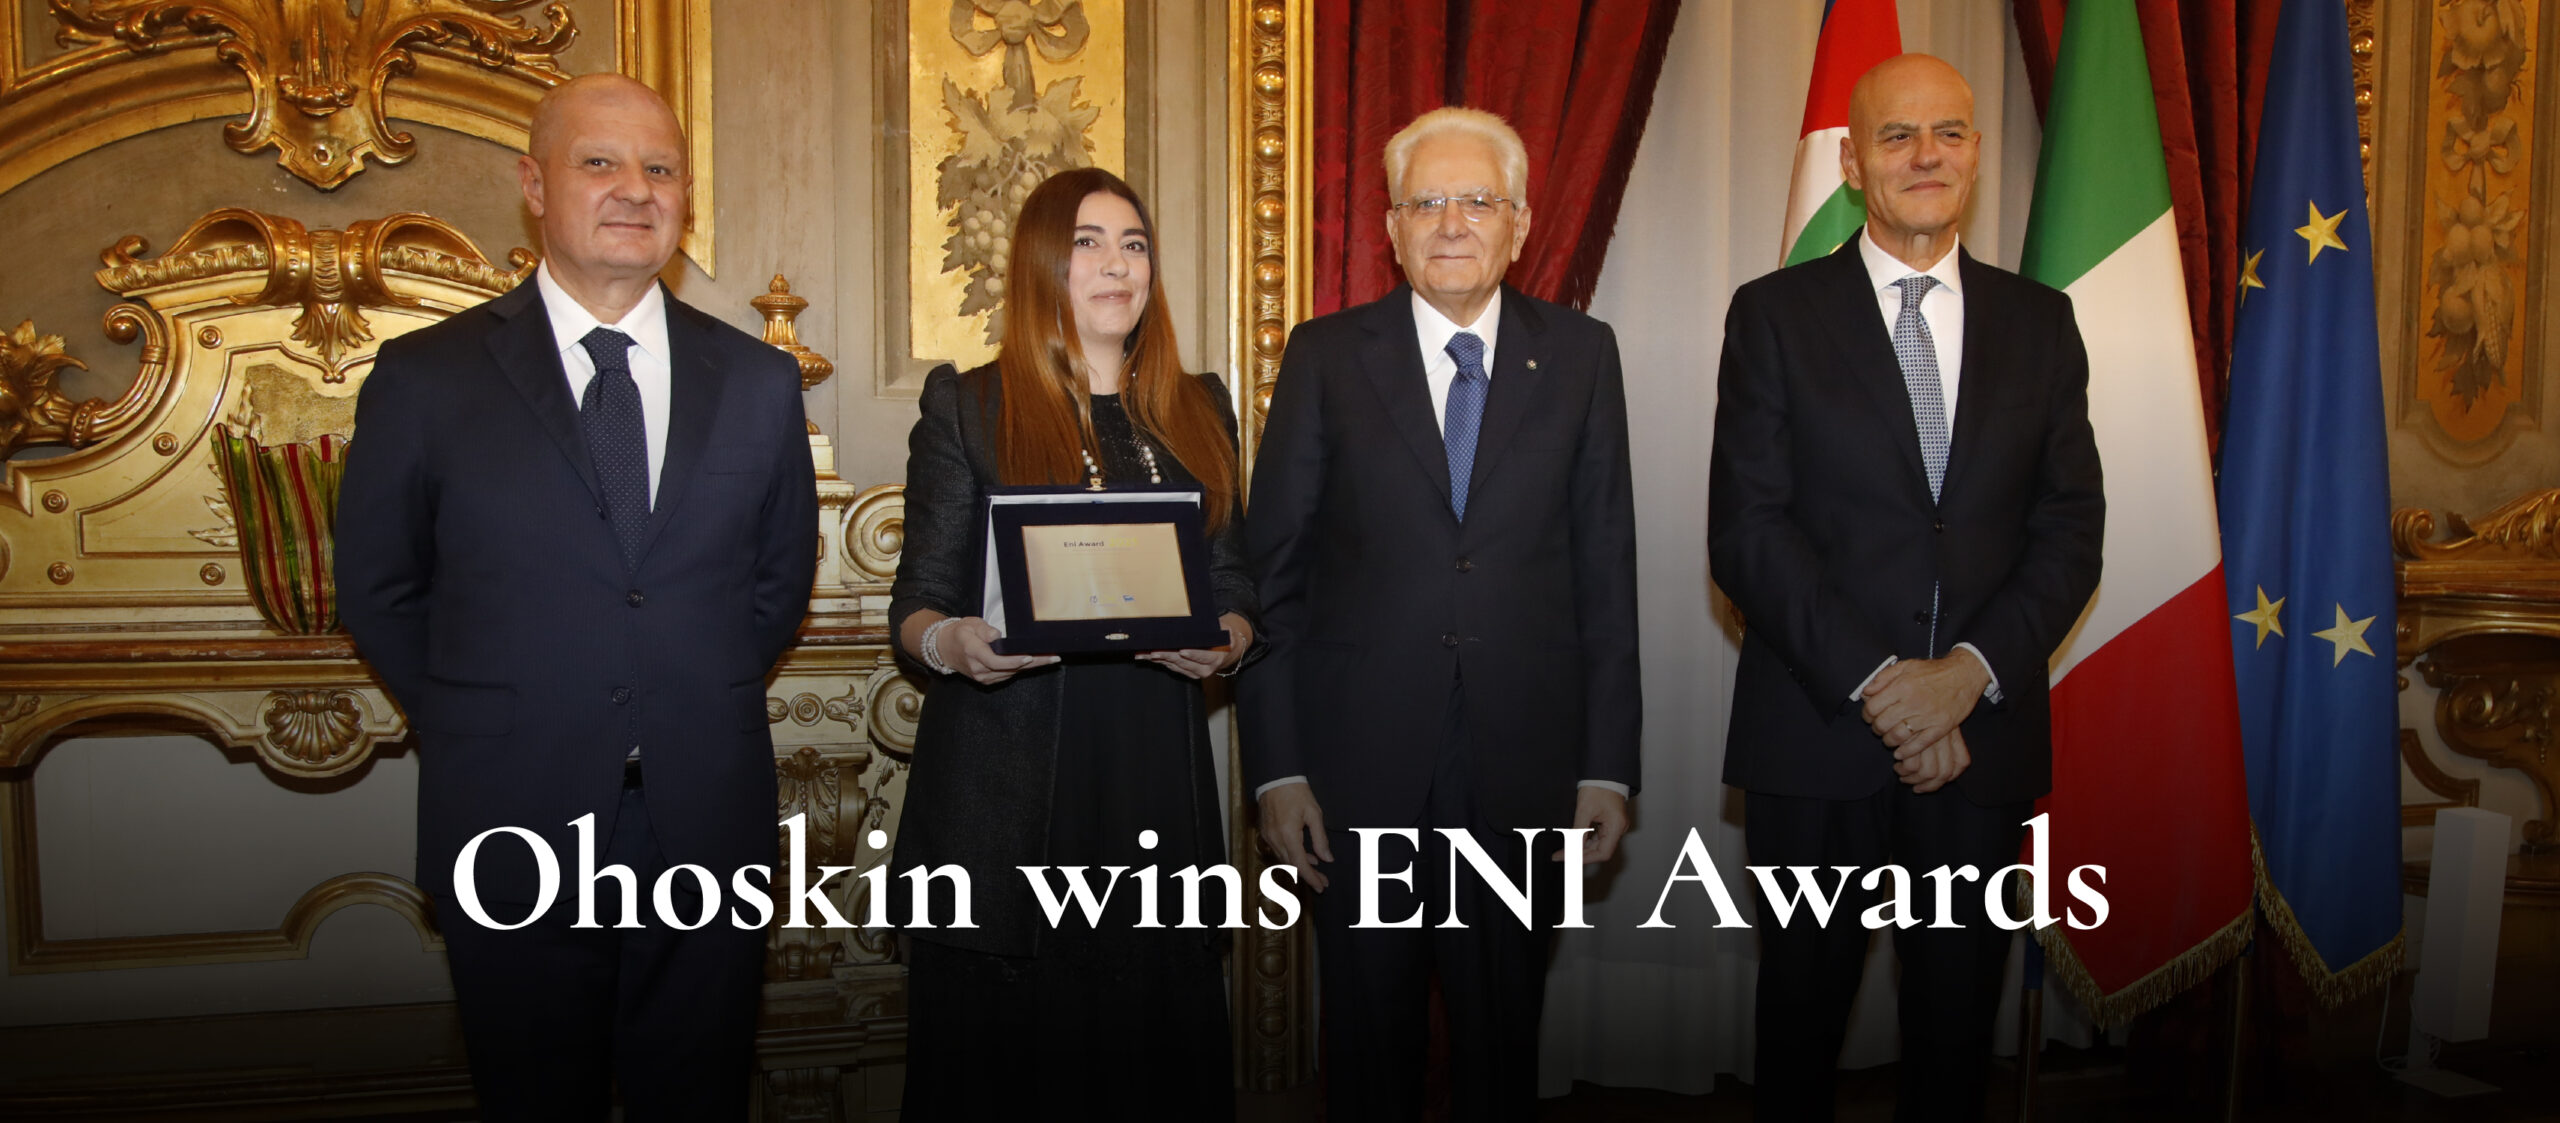 Ohoskin Eni awards: Adriana Santanocito with Sergio Mattarella, Claudio Descalzi, Giuseppe Zafarana